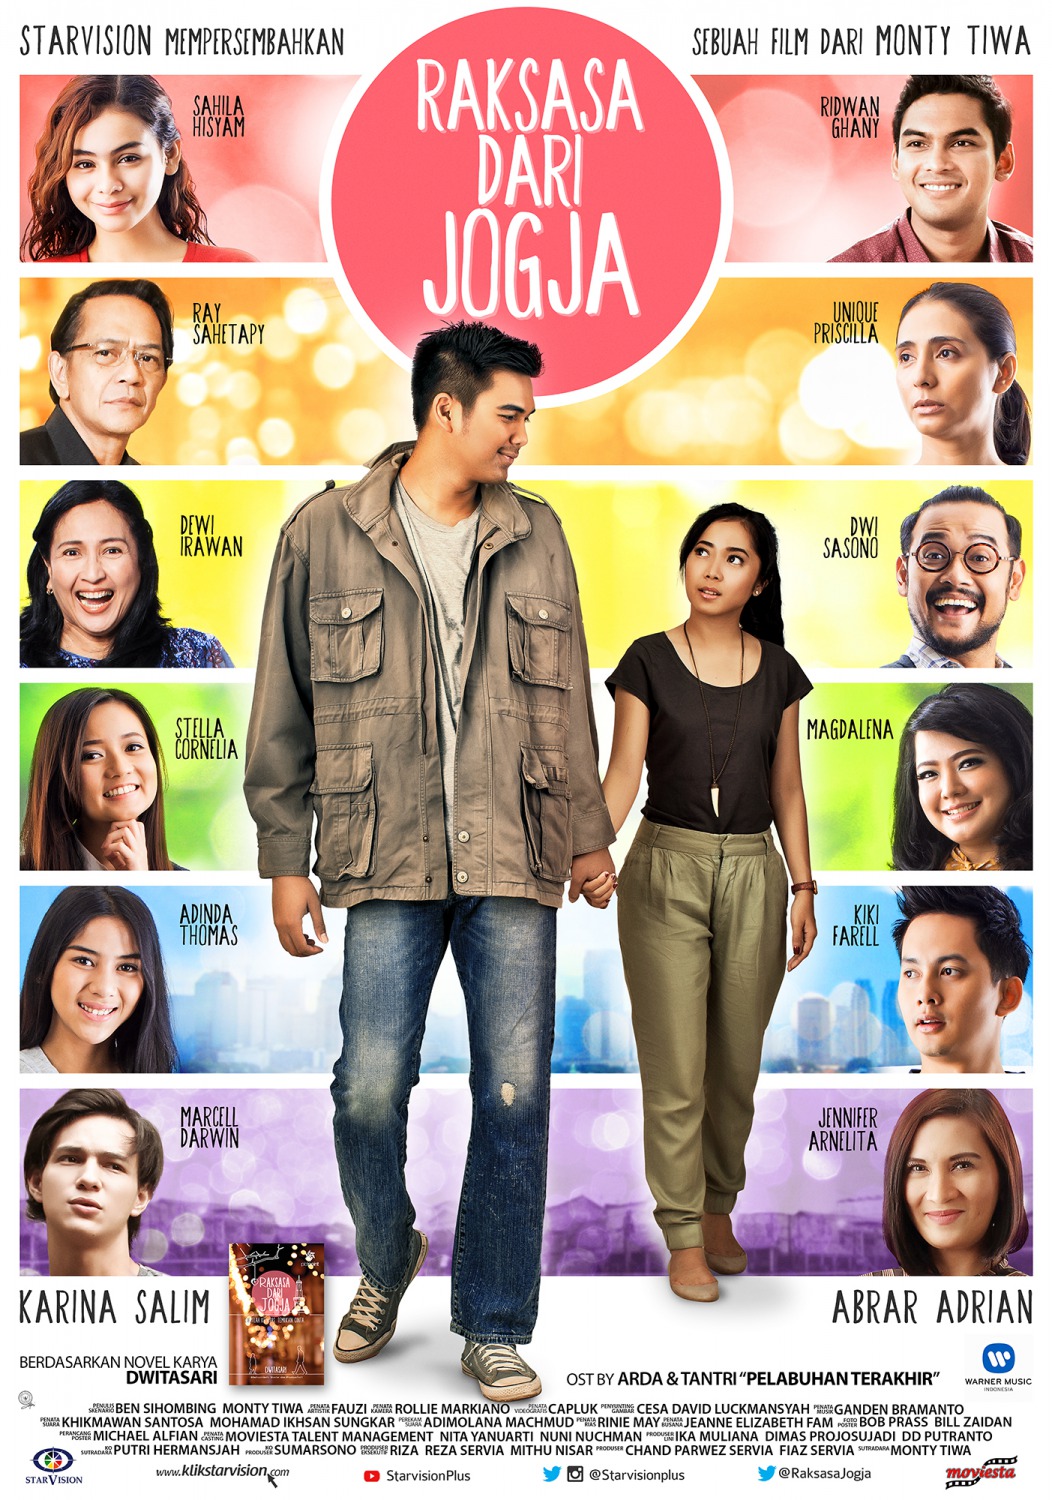 Extra Large Movie Poster Image for Raksasa Dari Jogja 